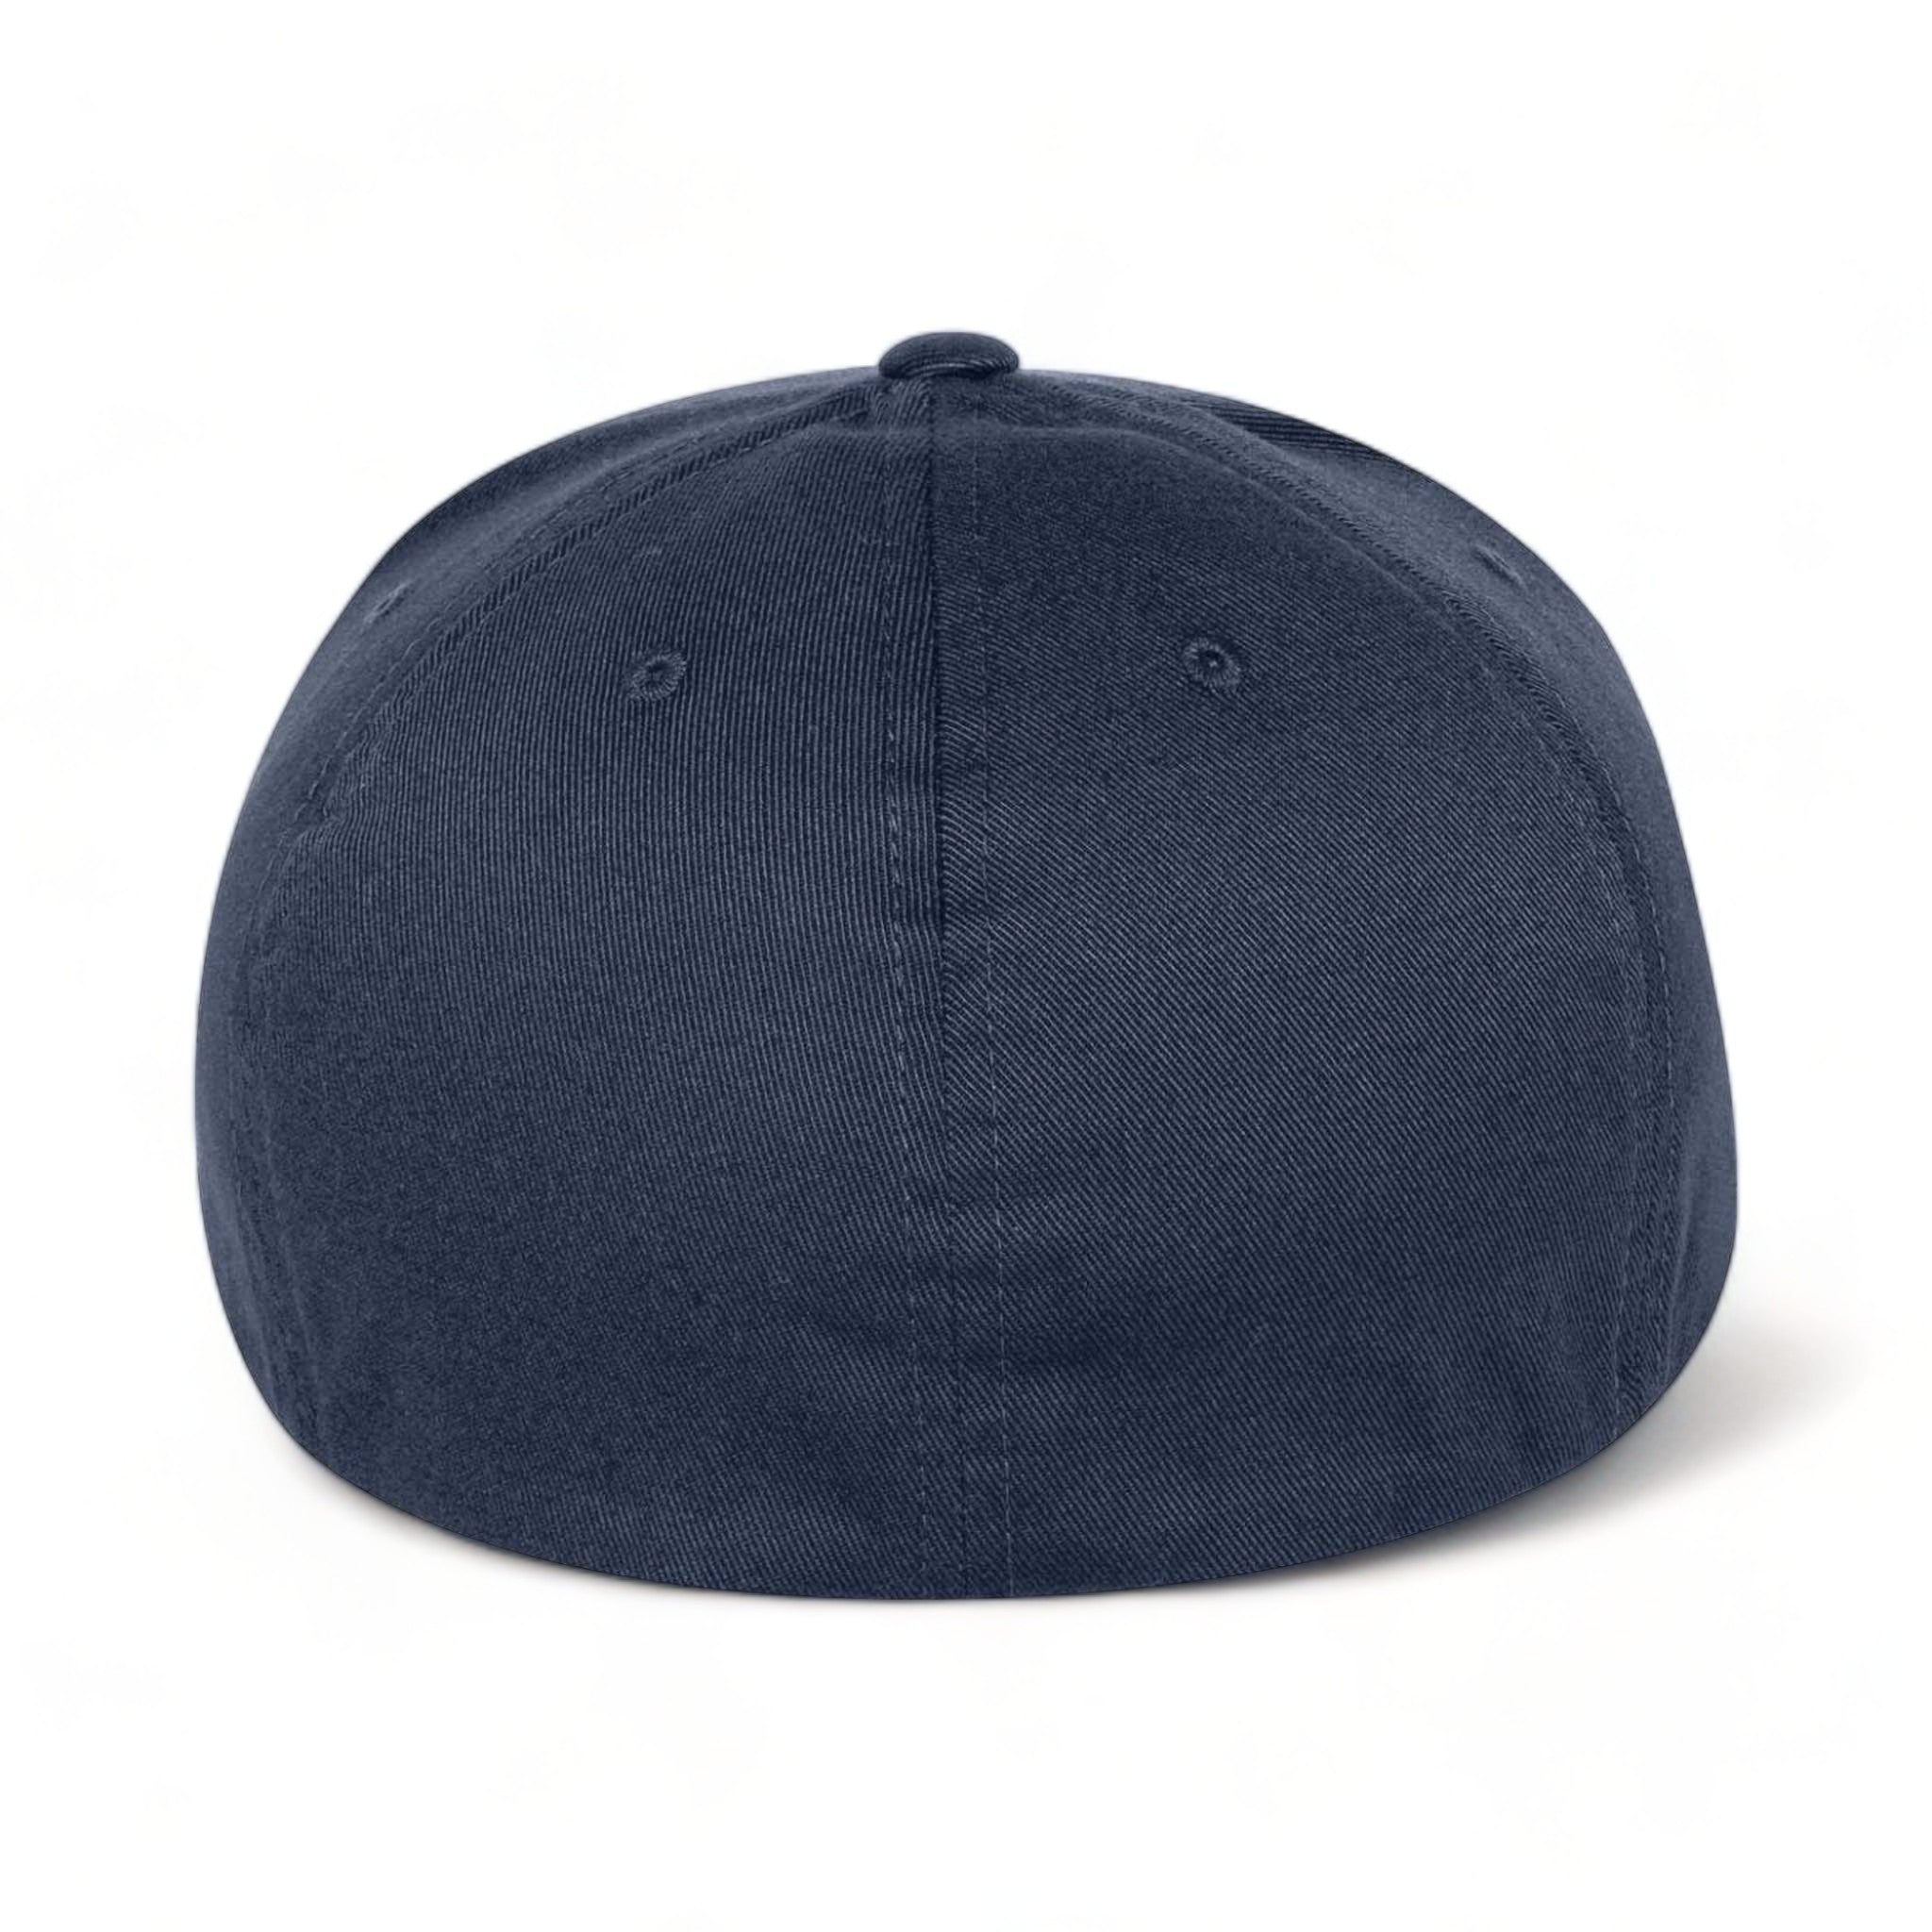 Back view of Flexfit 6297f custom hat in navy